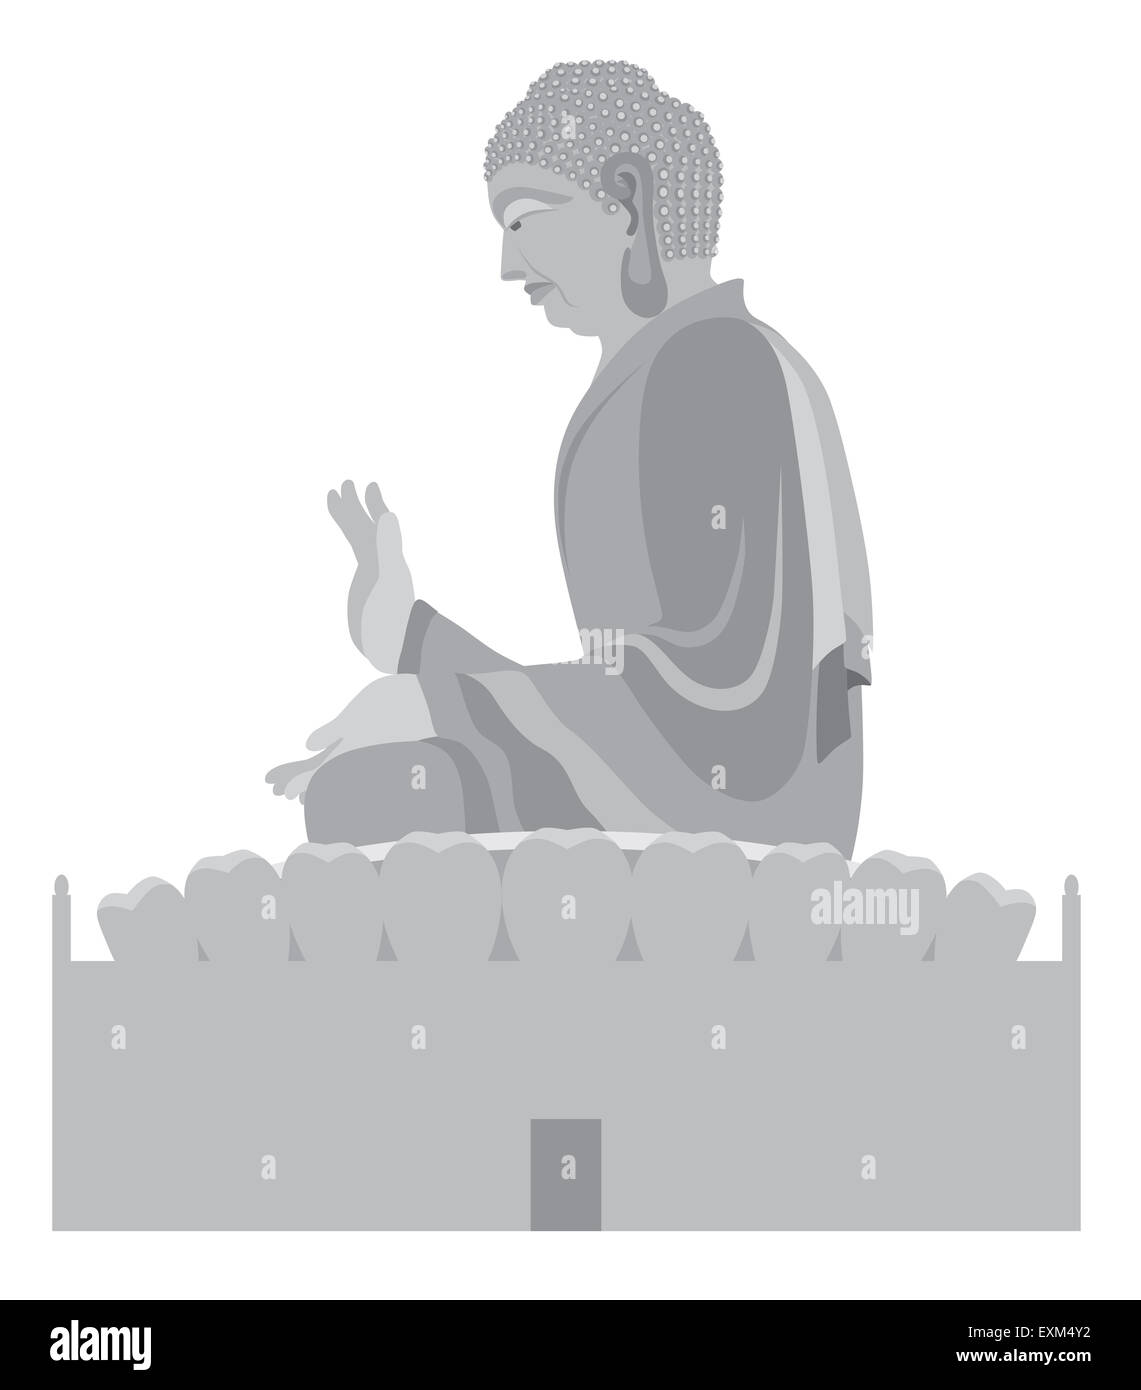 Big Buddha asiatica seduta su Lotus Pad statua illustrazione in scala di grigi Foto Stock